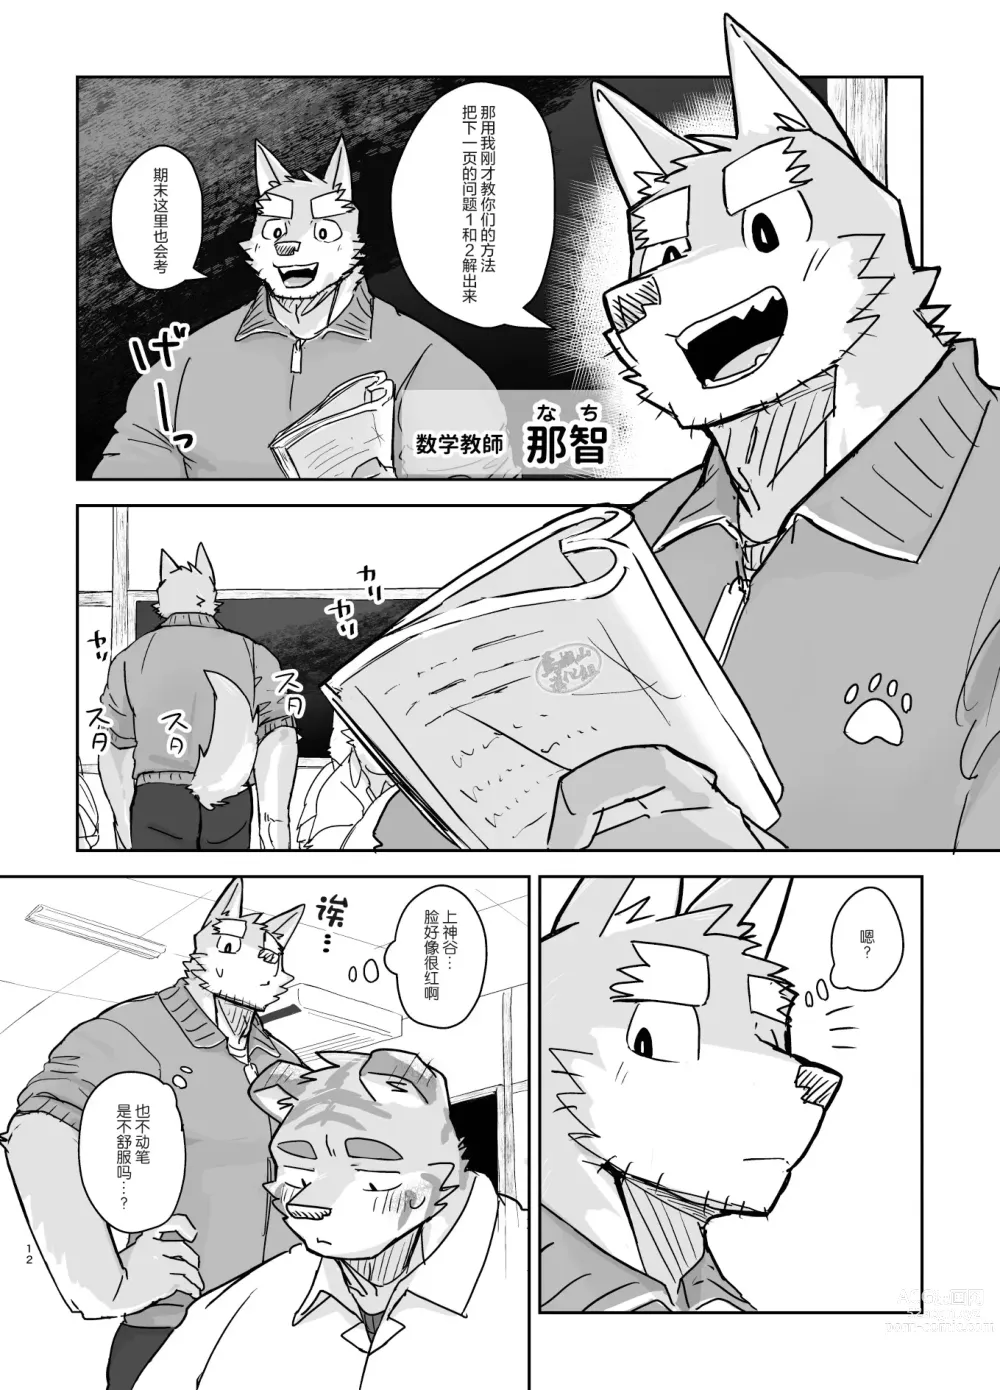 Page 12 of doujinshi 关于我在教室被榨精这件事